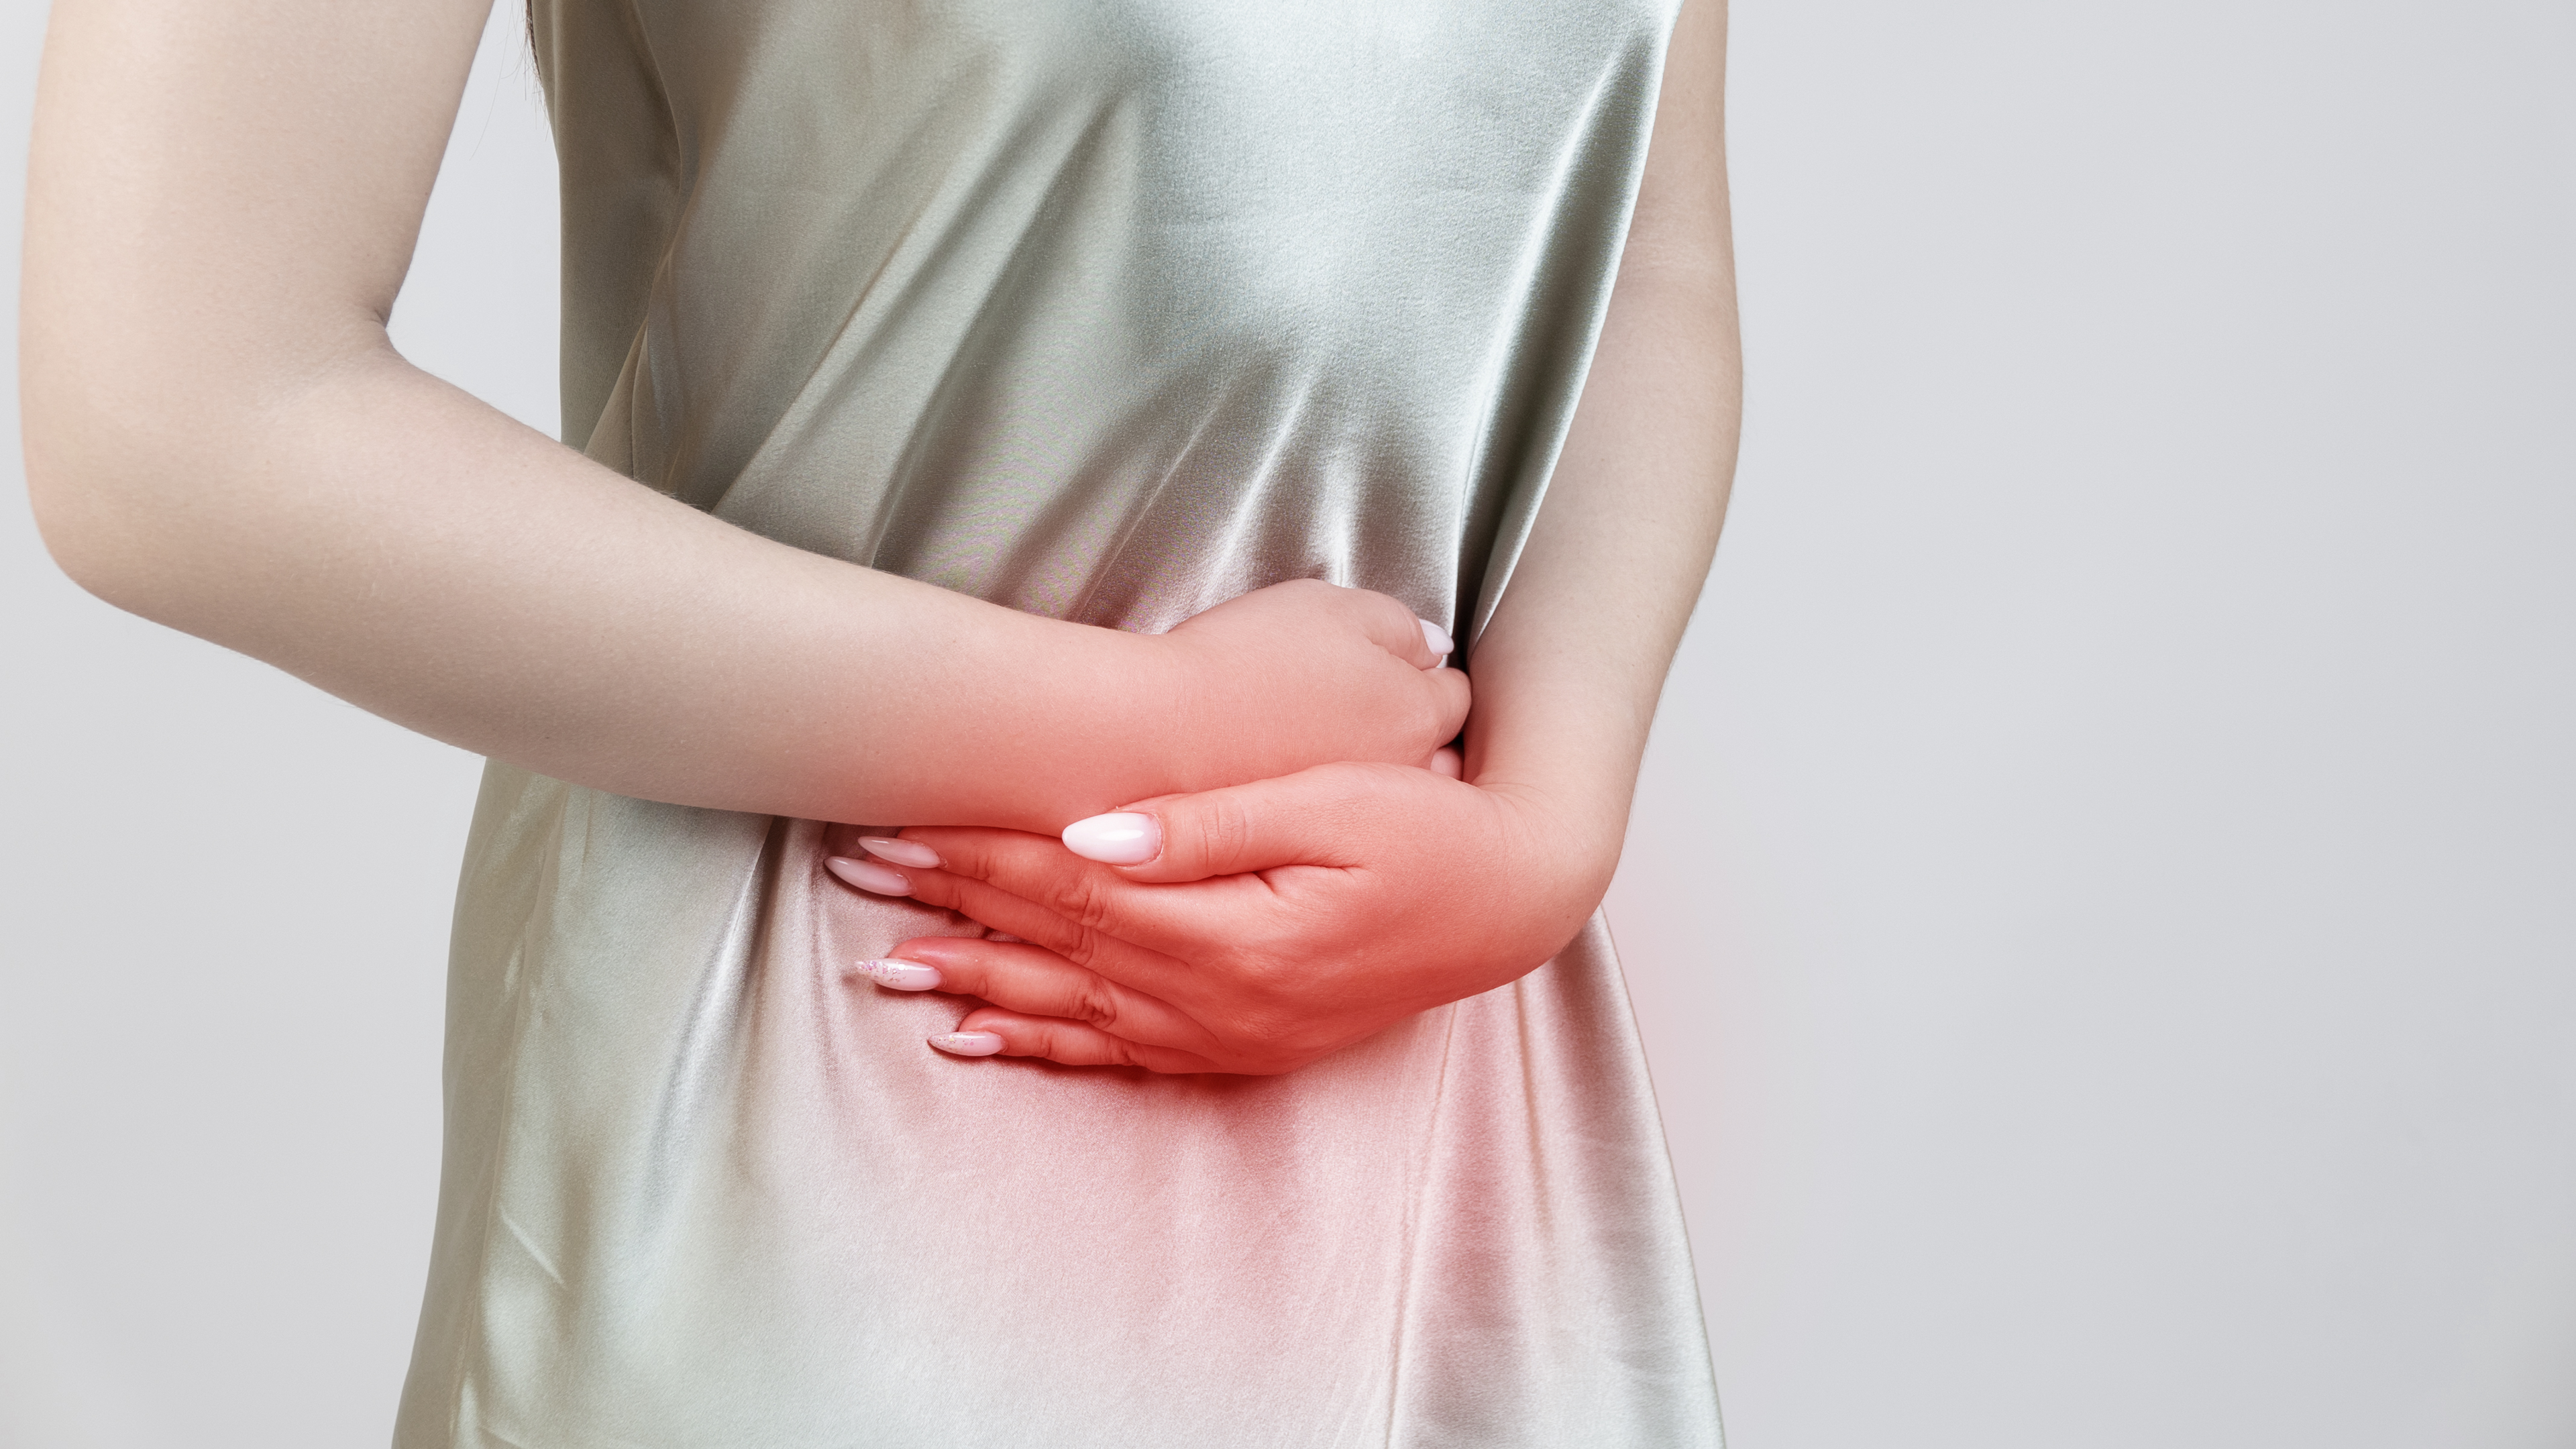 Endometriosis causes severe pain in the lower abdomen.